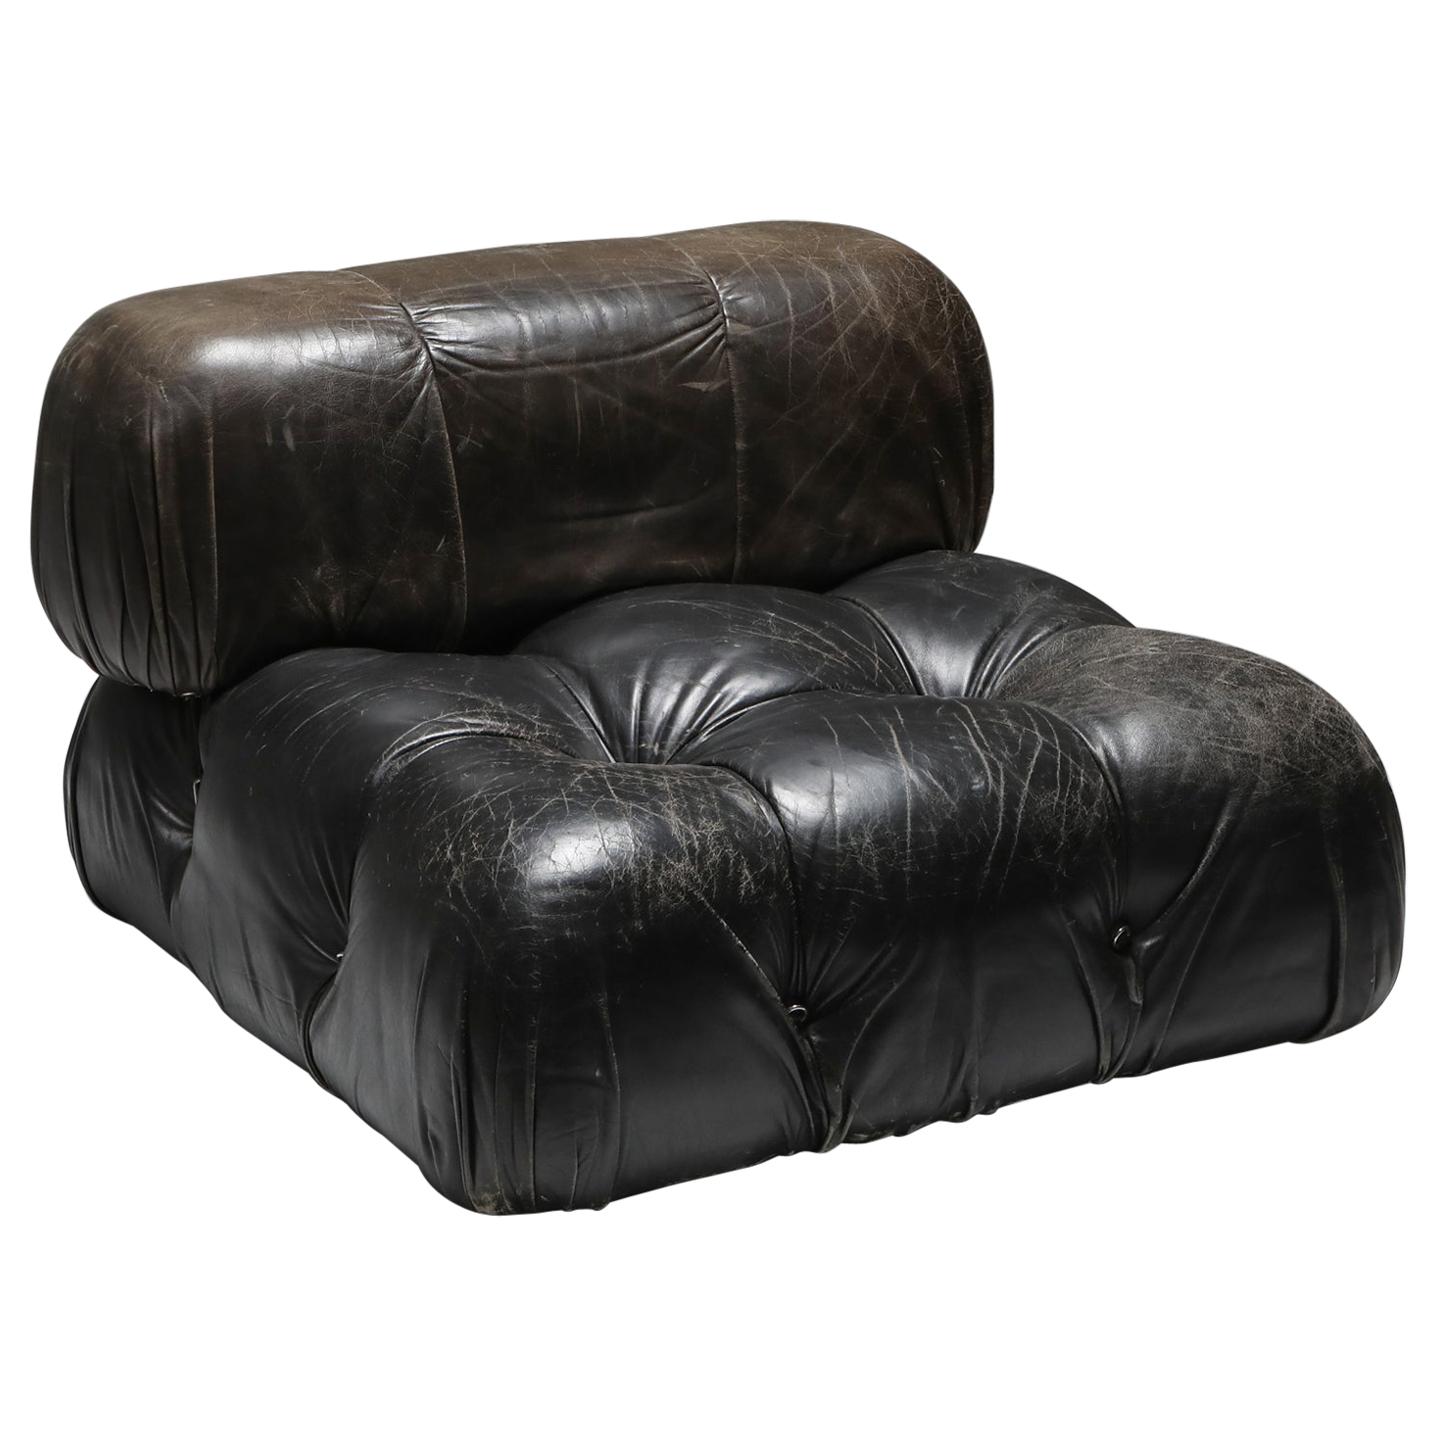 Mario Bellini's 'Camaleonda' Lounge Chairs in Original Black Leather